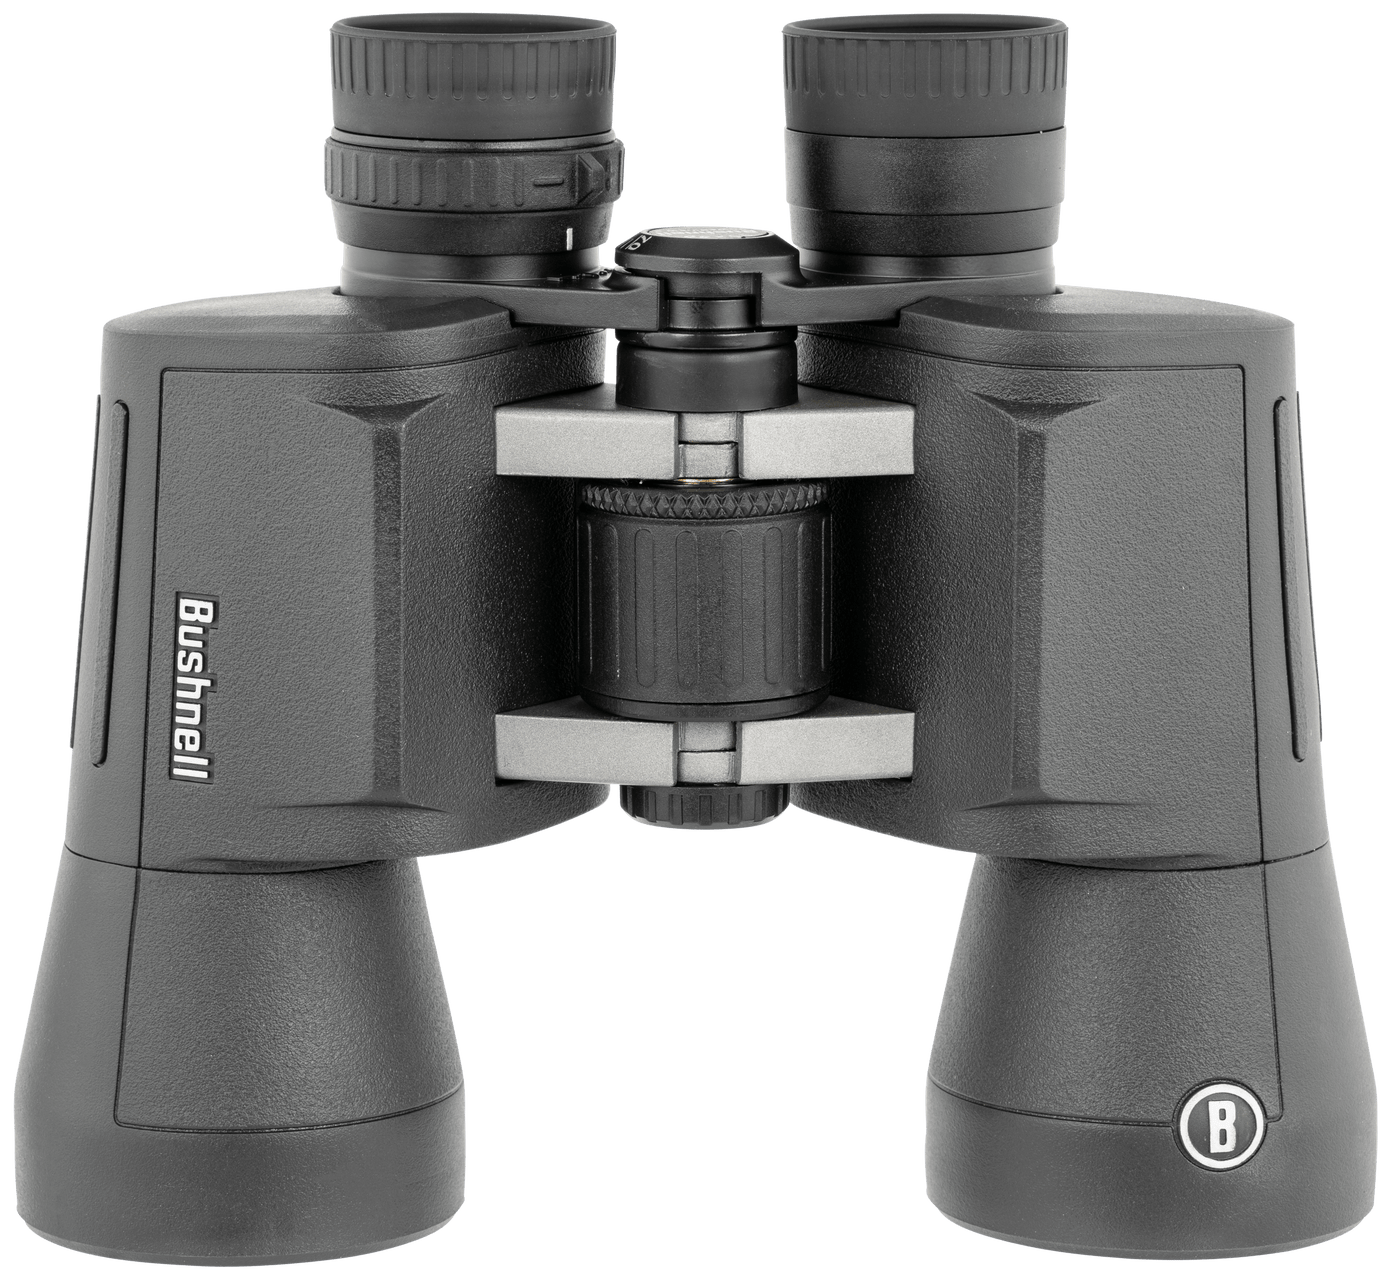 Bushnell Bushnell Powerview 2 Binoculars Black 10x50 Optics and Accessories